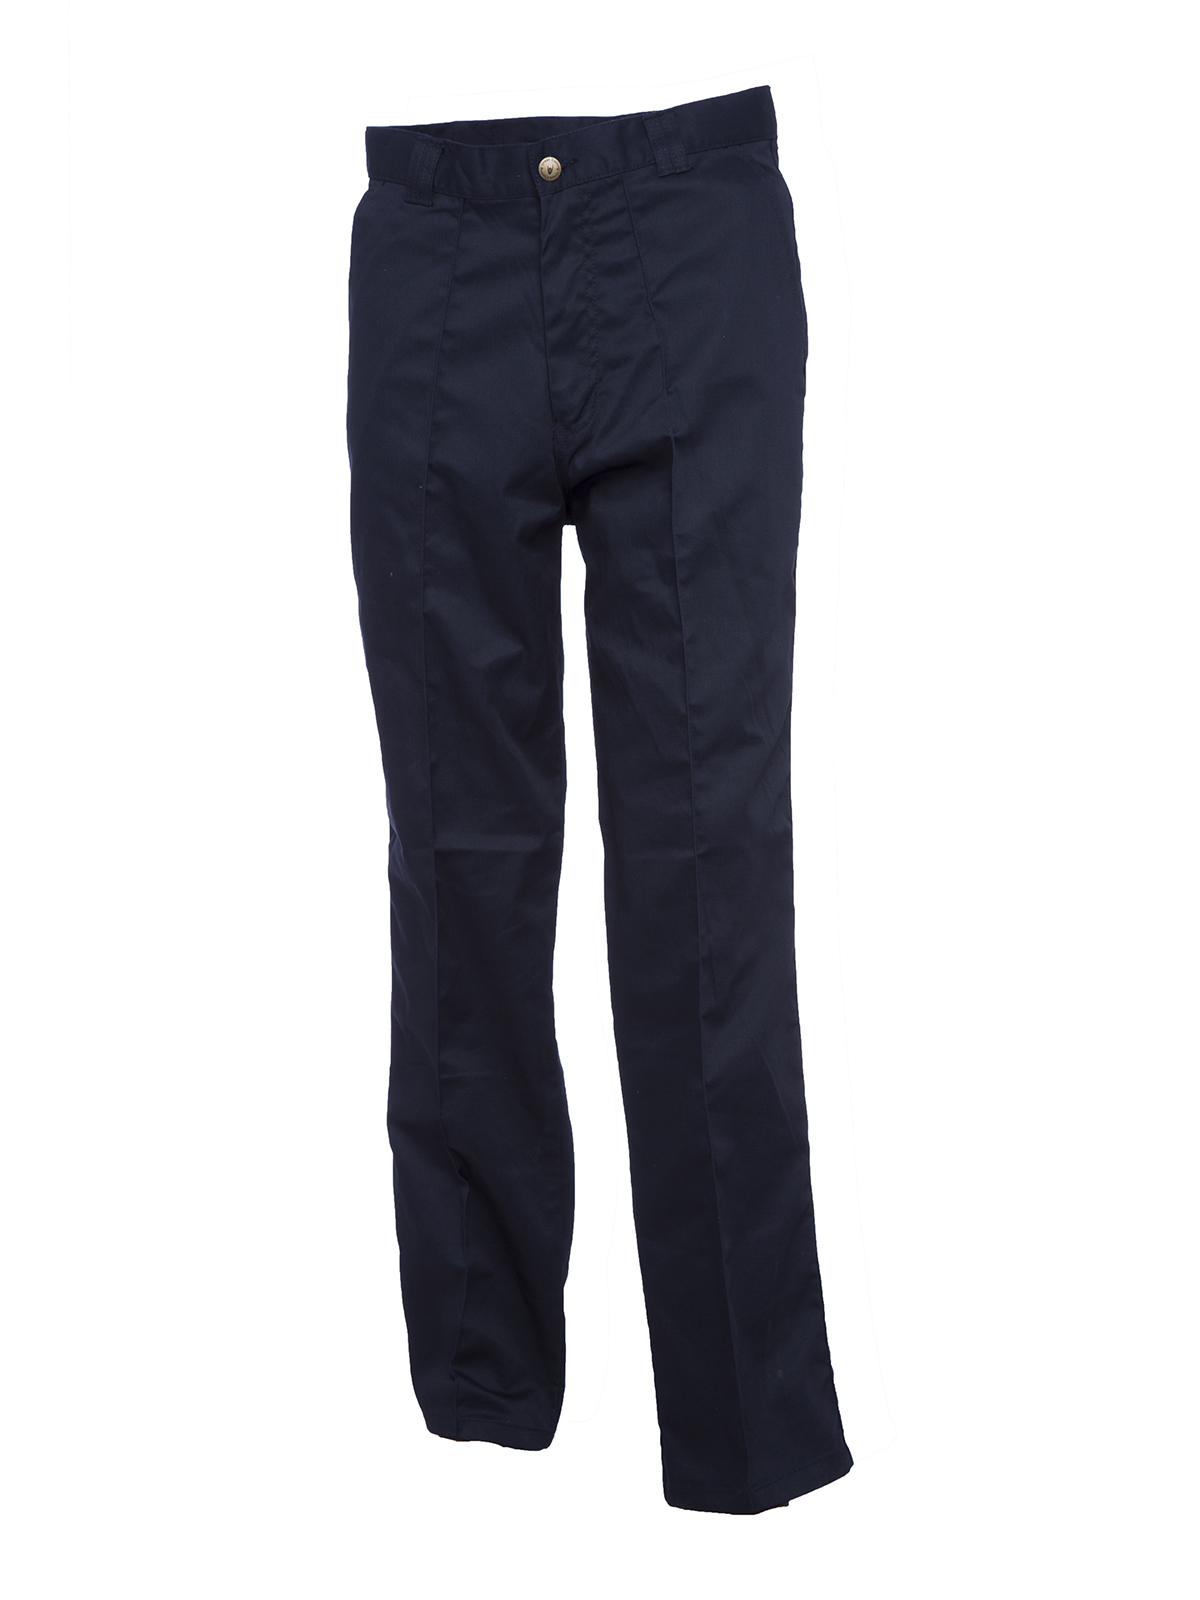 Workwear Trousers, Navy Blue - 28L